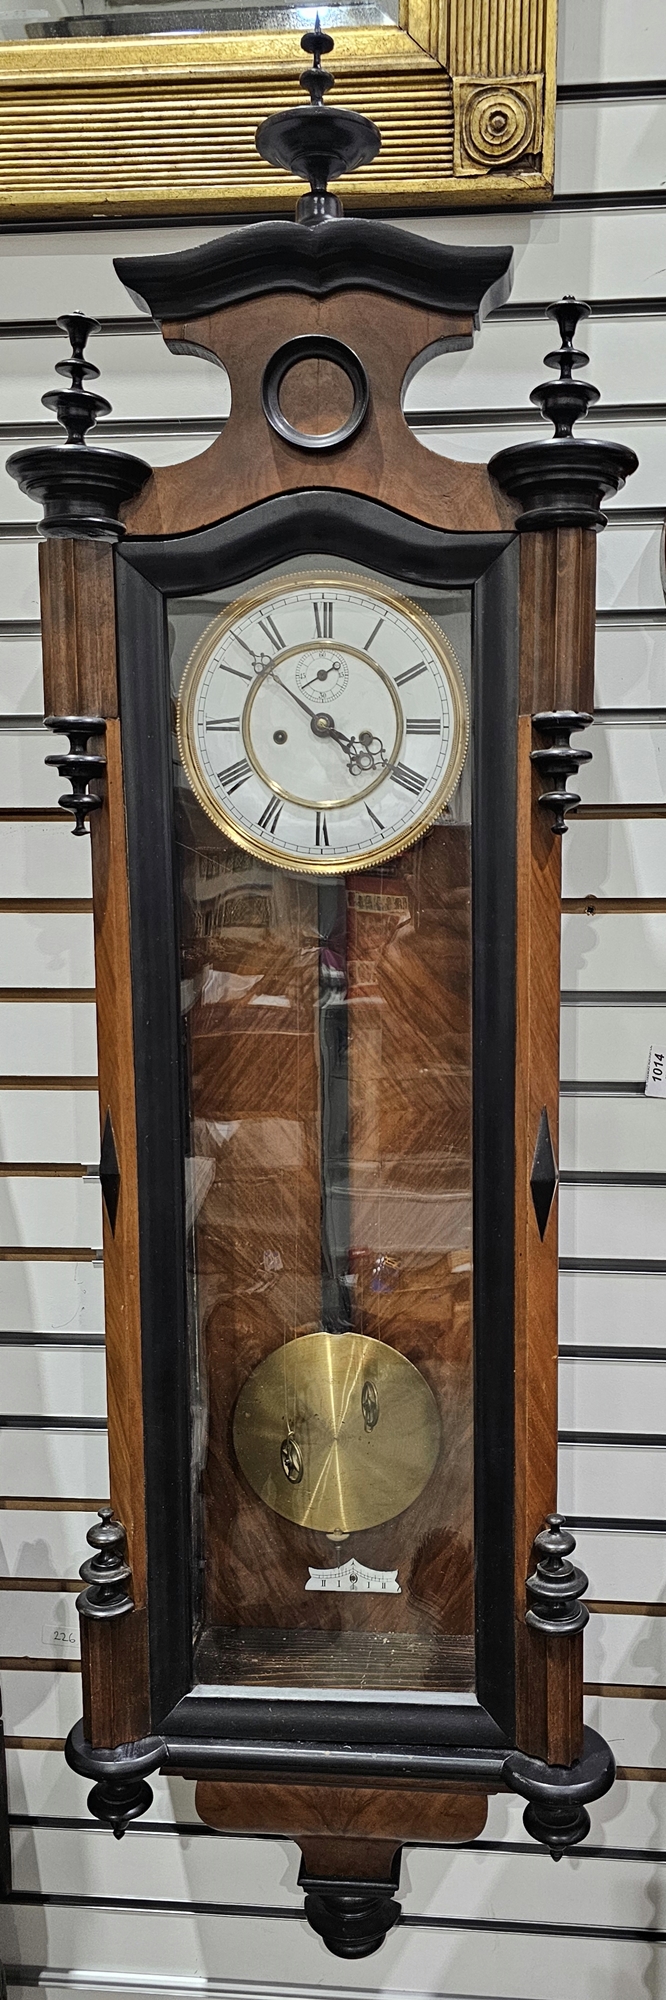 19th century Vienna-style walnut regulator clock, with a white enamel dial, with black Arabic